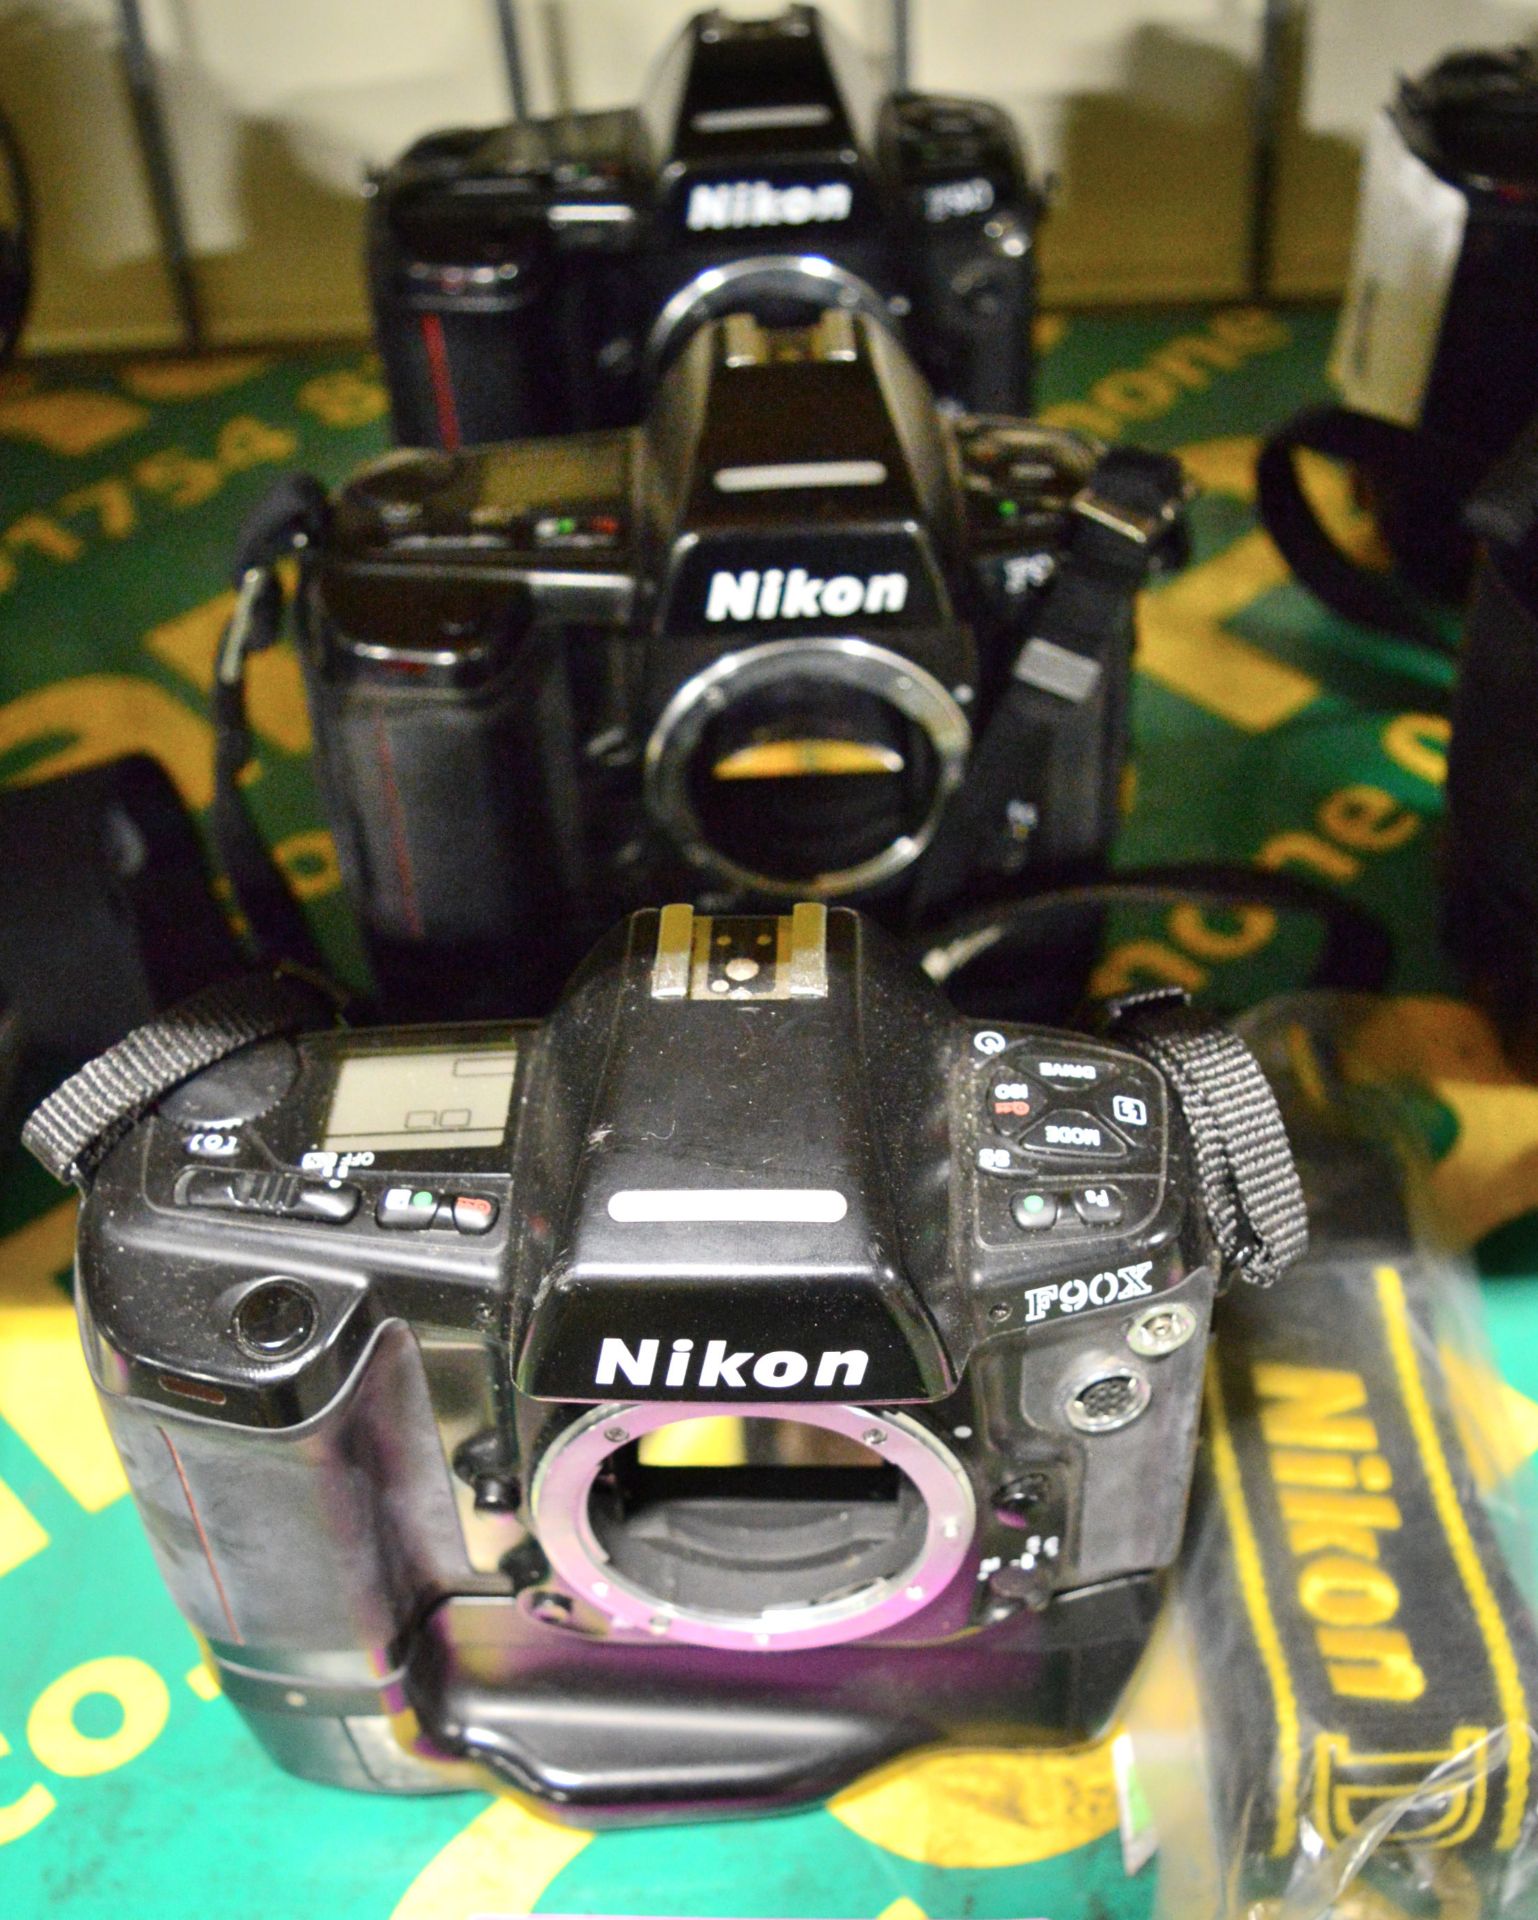 3x Nikon F90X Camera Bodies with Battery Boxes. Strap.